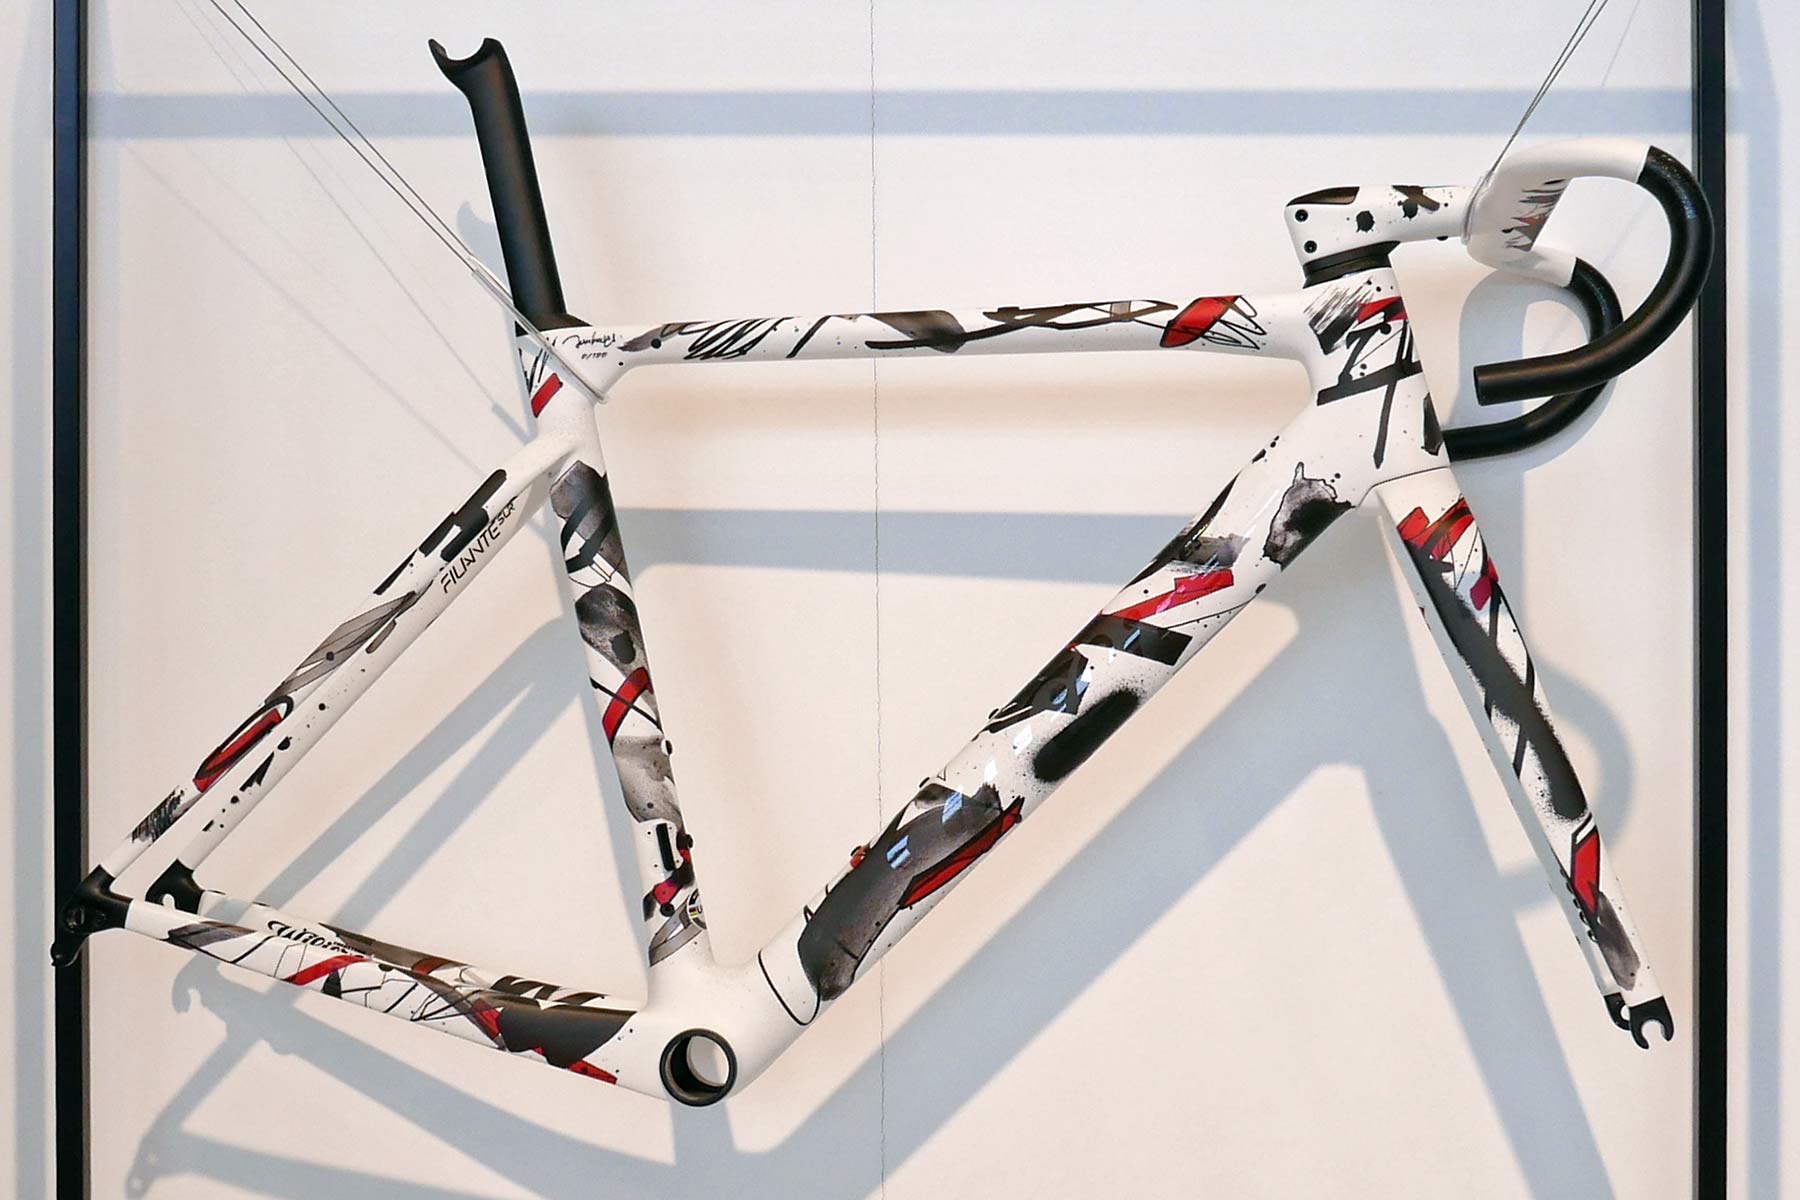 Wilier Unico, limited artist-series Filante SLR aero road bike, artwork by Jun Inoue